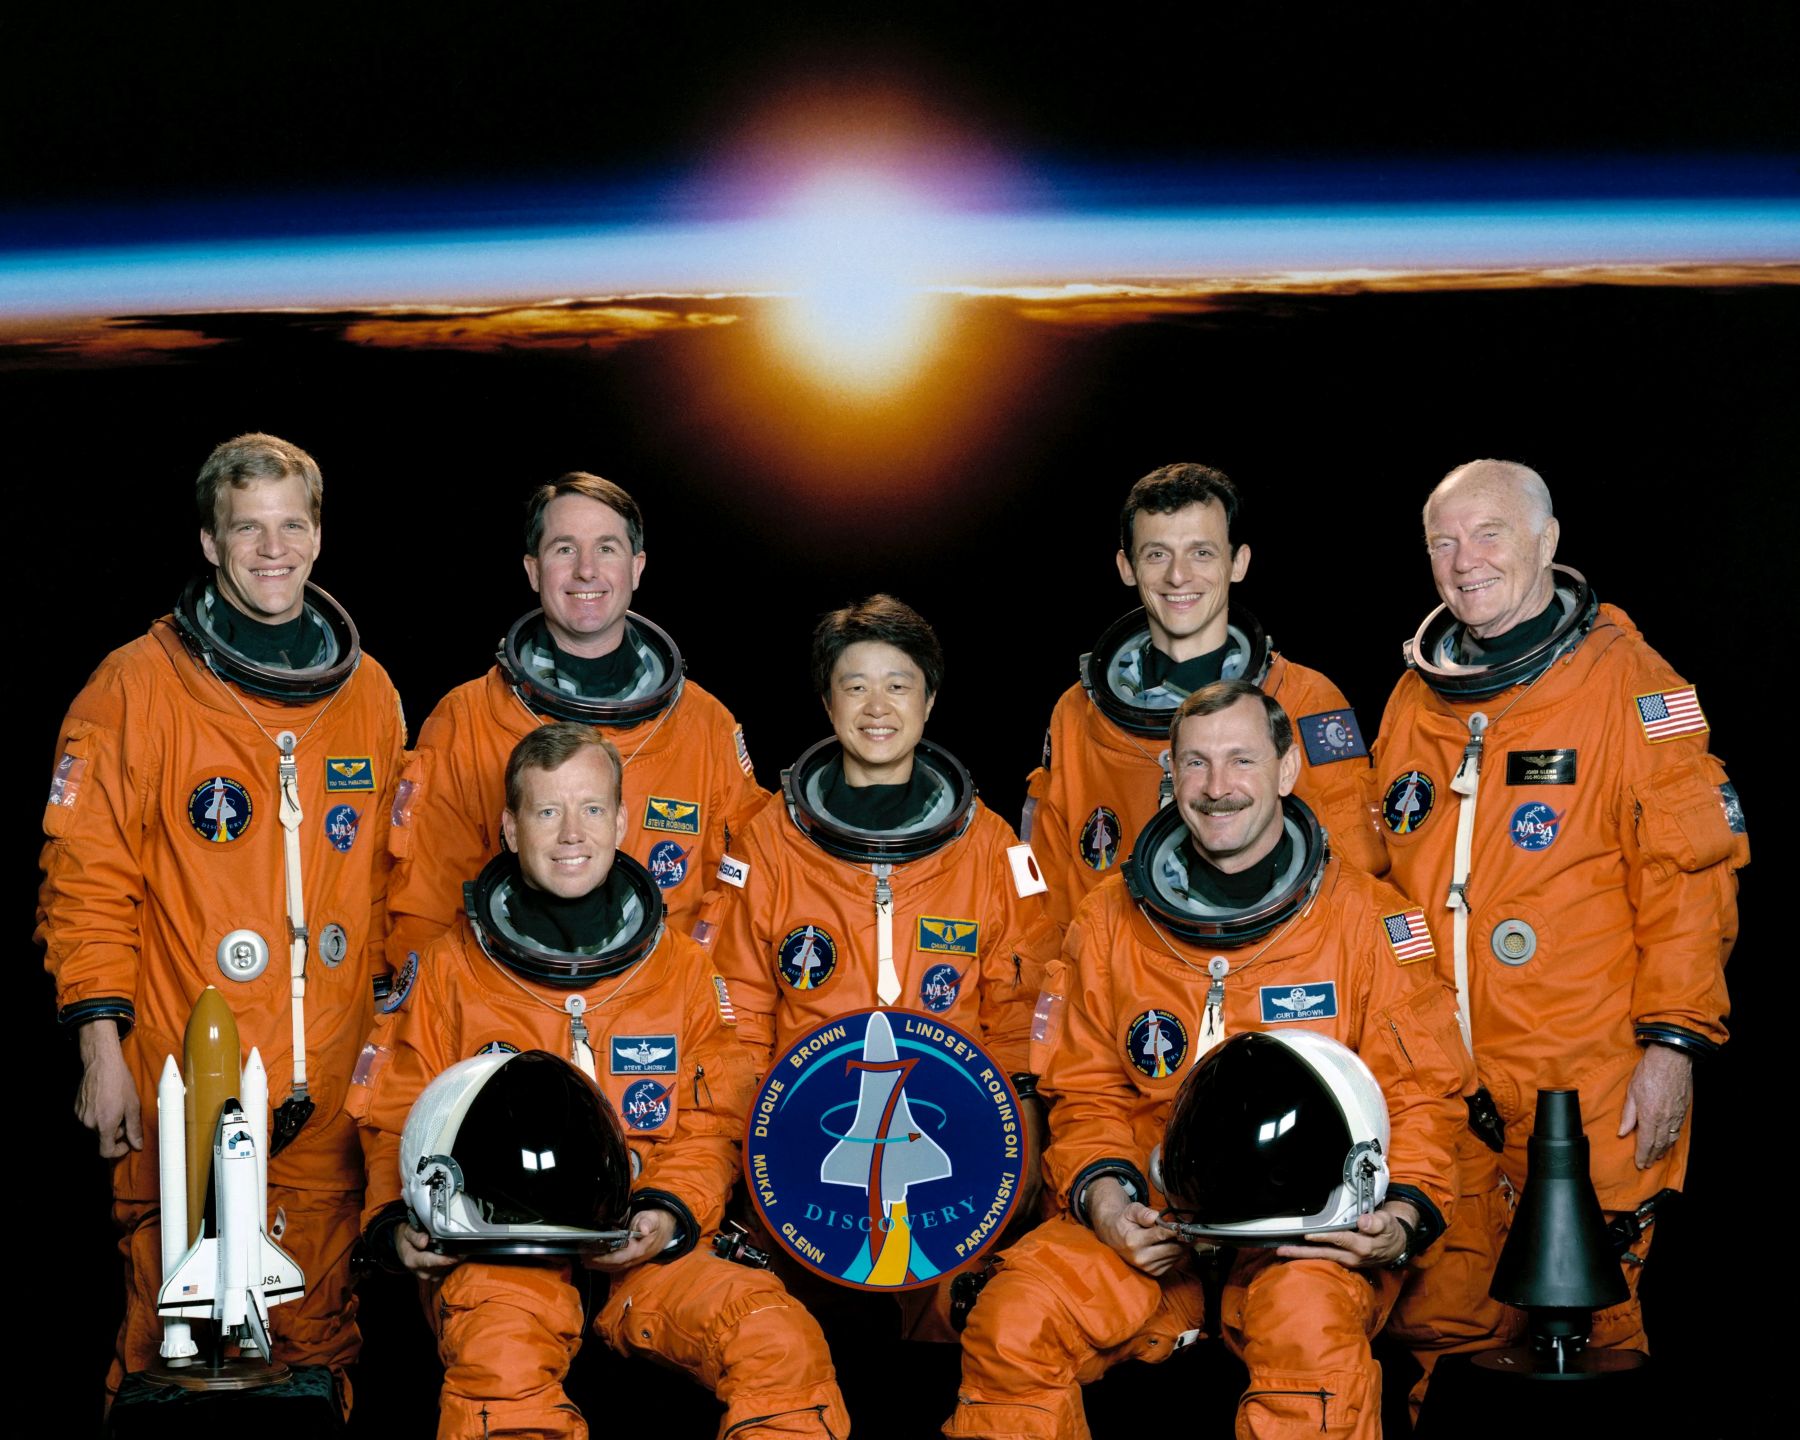 25 Years Ago: STS-95, John Glenn Returns to Space